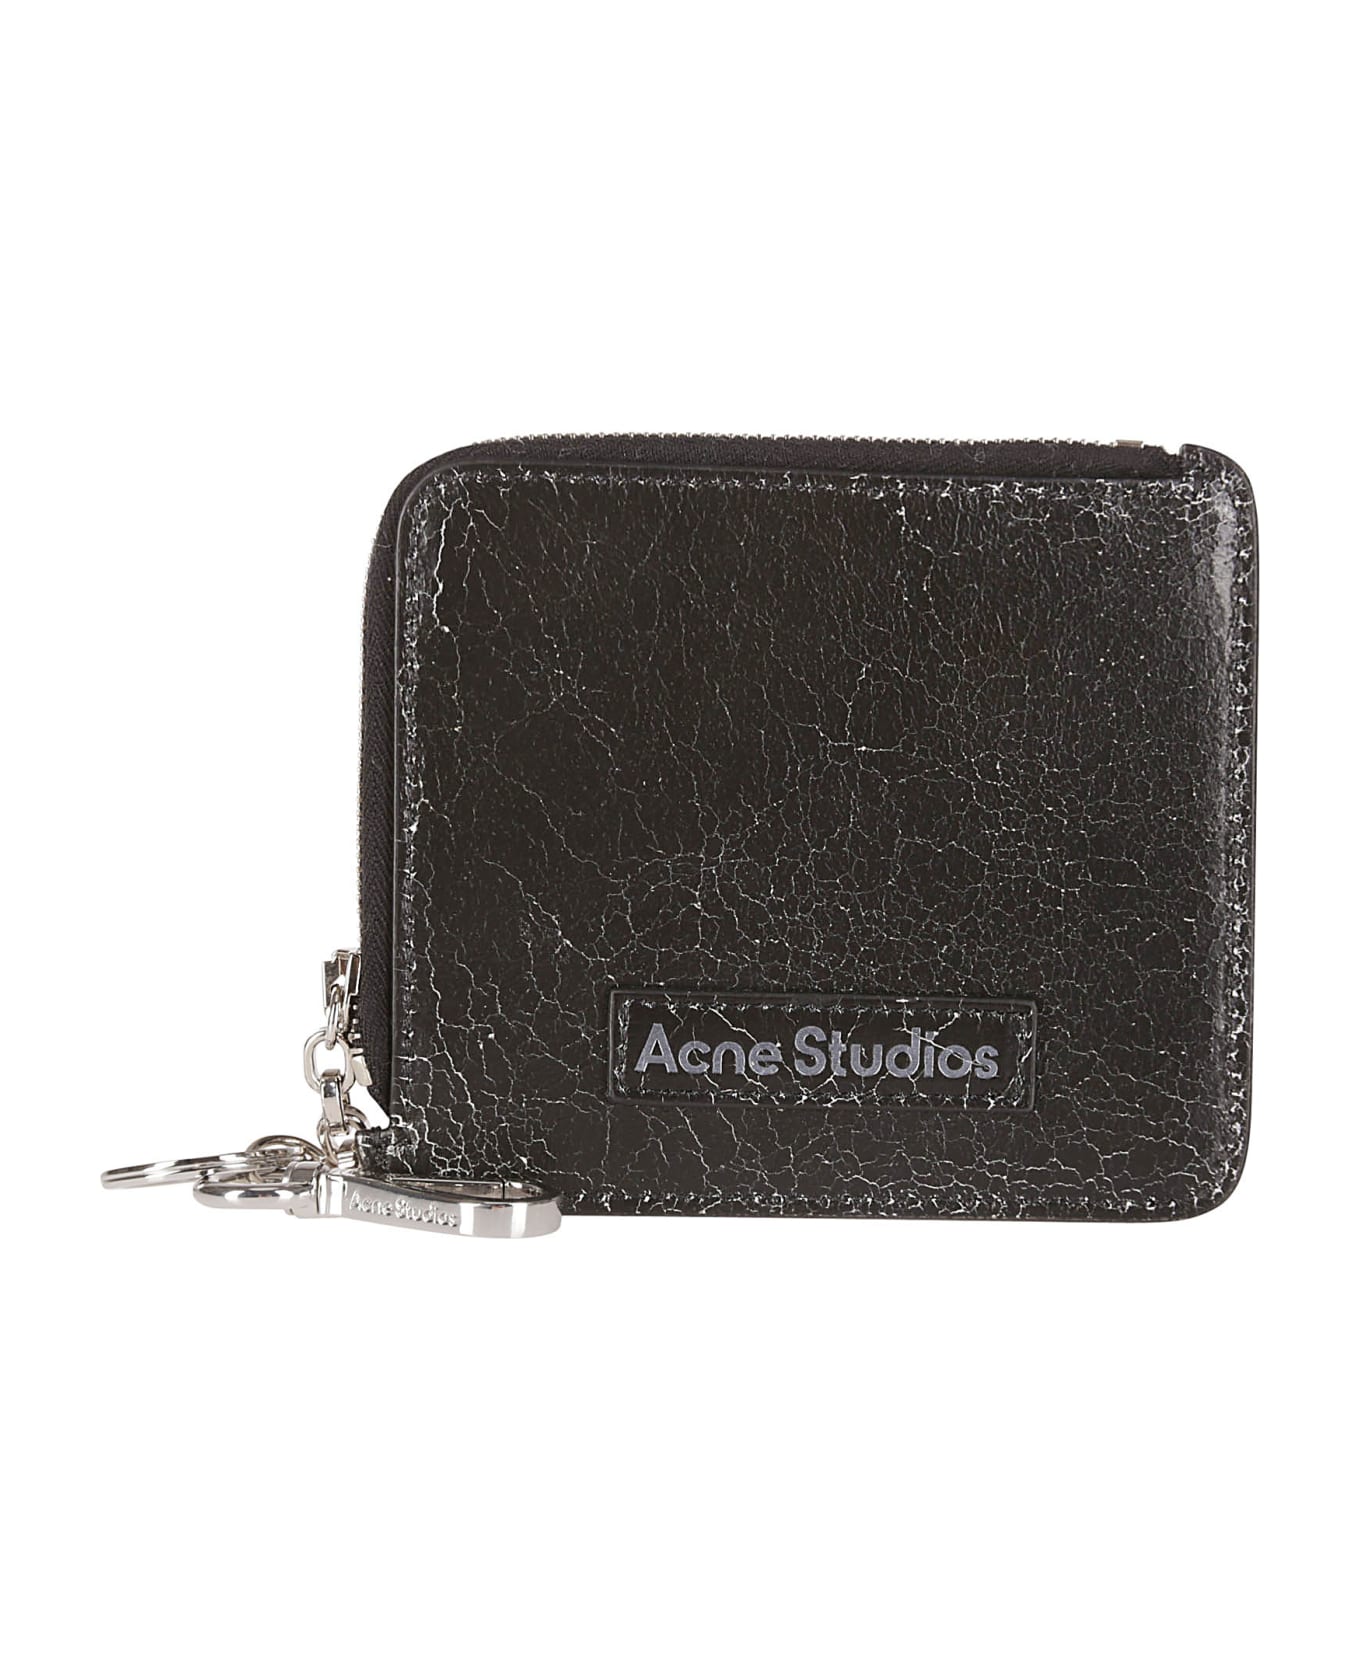 Acne Studios Fnuxslgs000273 - BLACK 財布